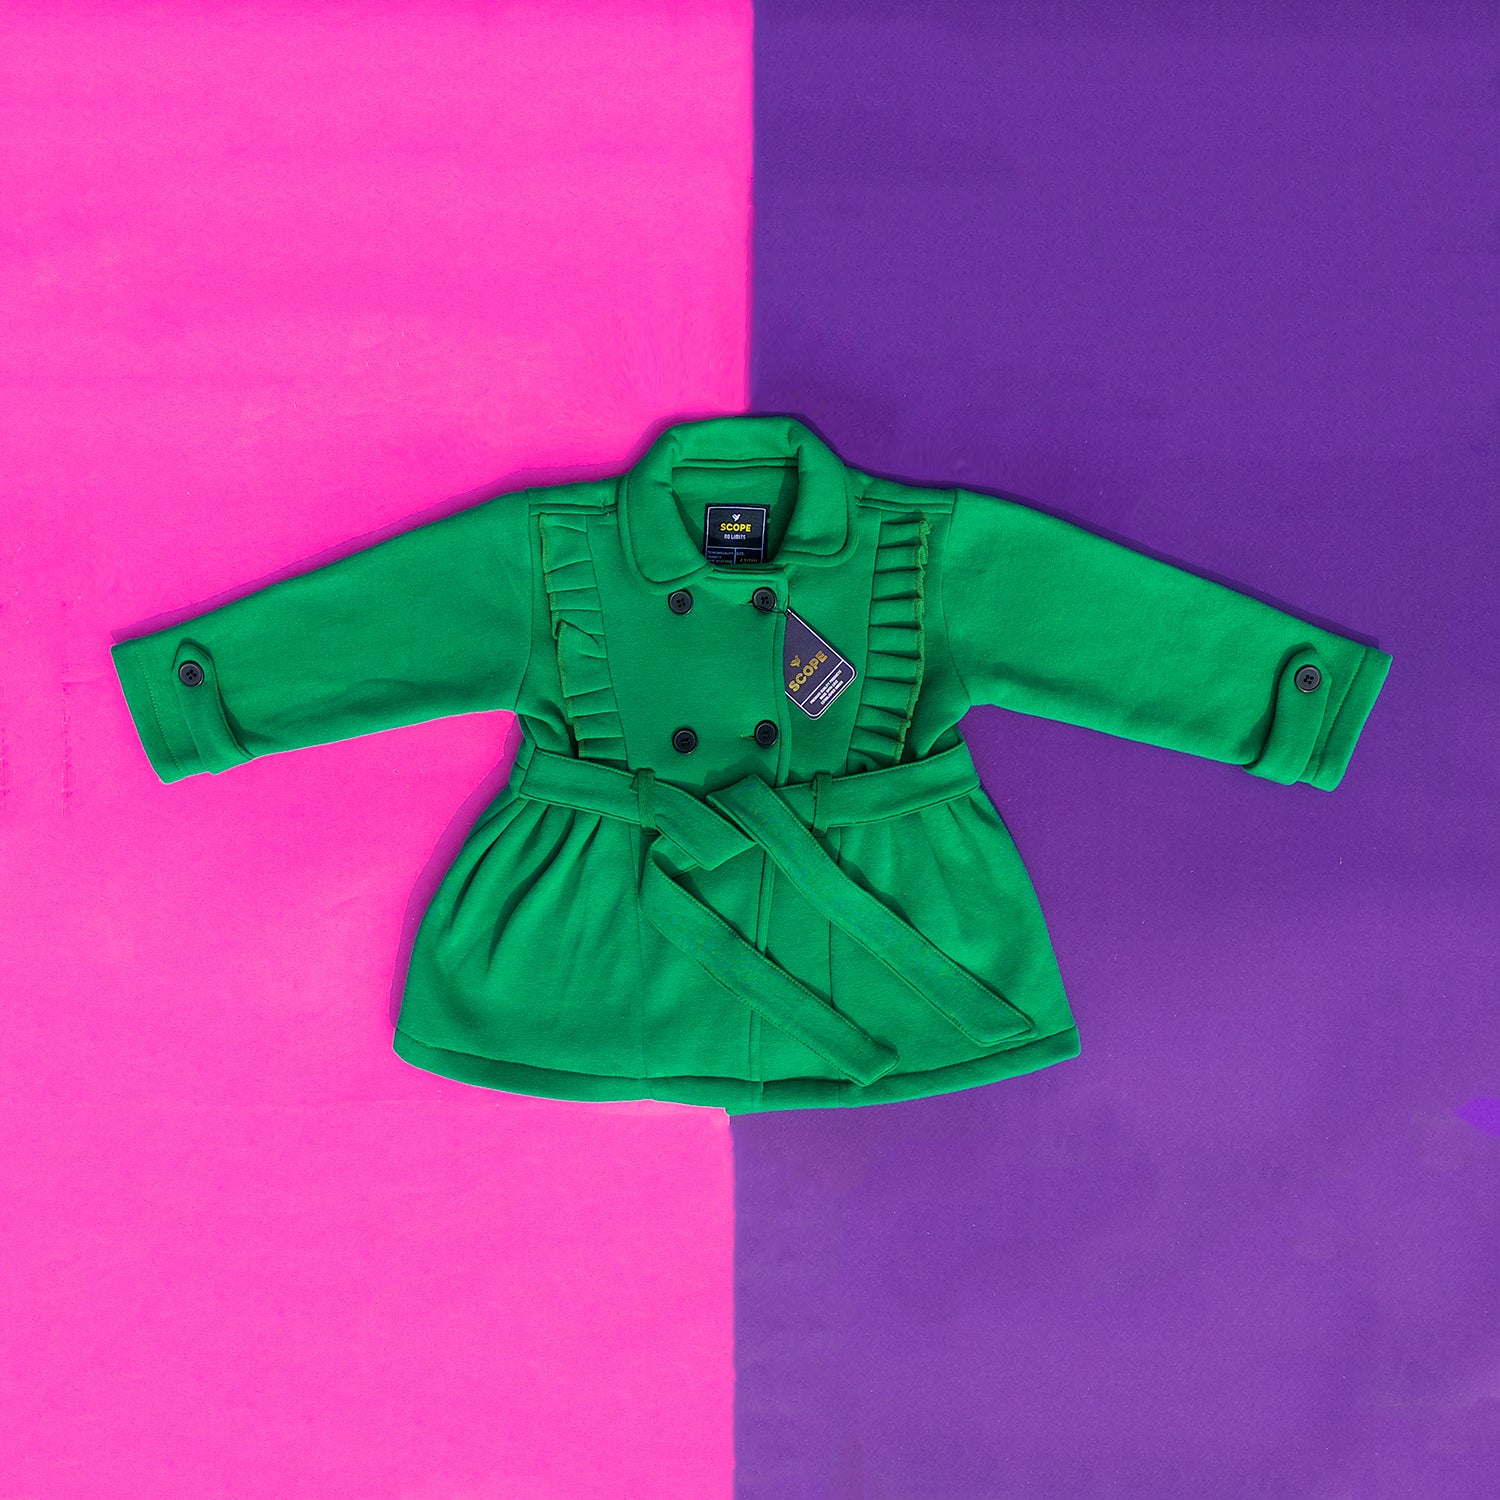 Imperial Green Coat